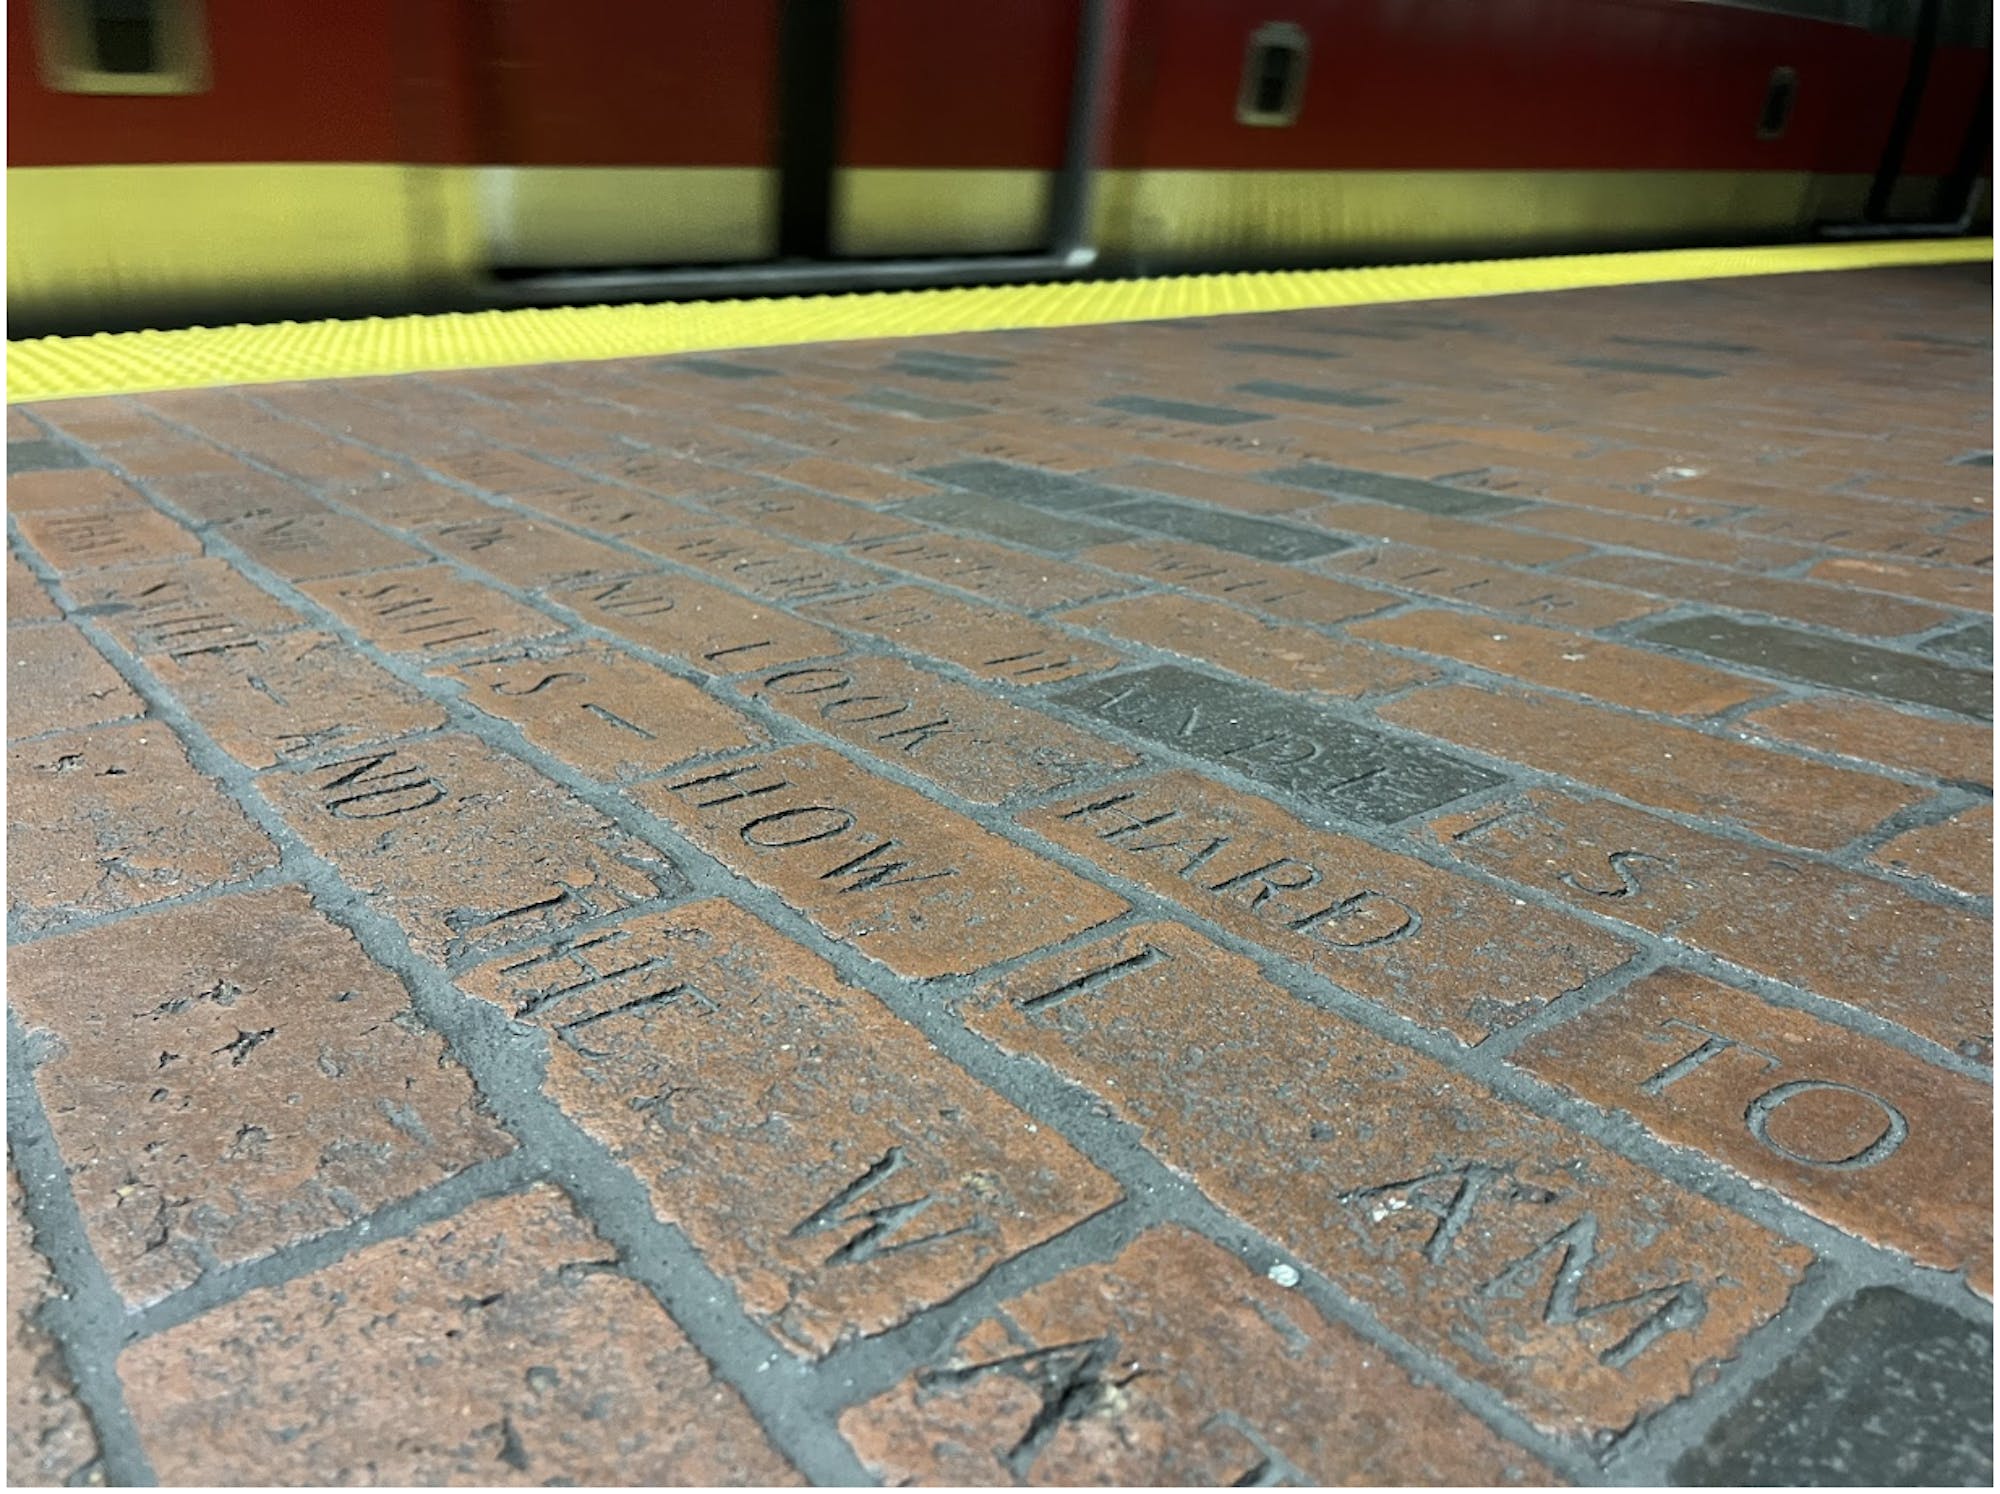 A poem engraved into the platform floor at the Davis Square station.